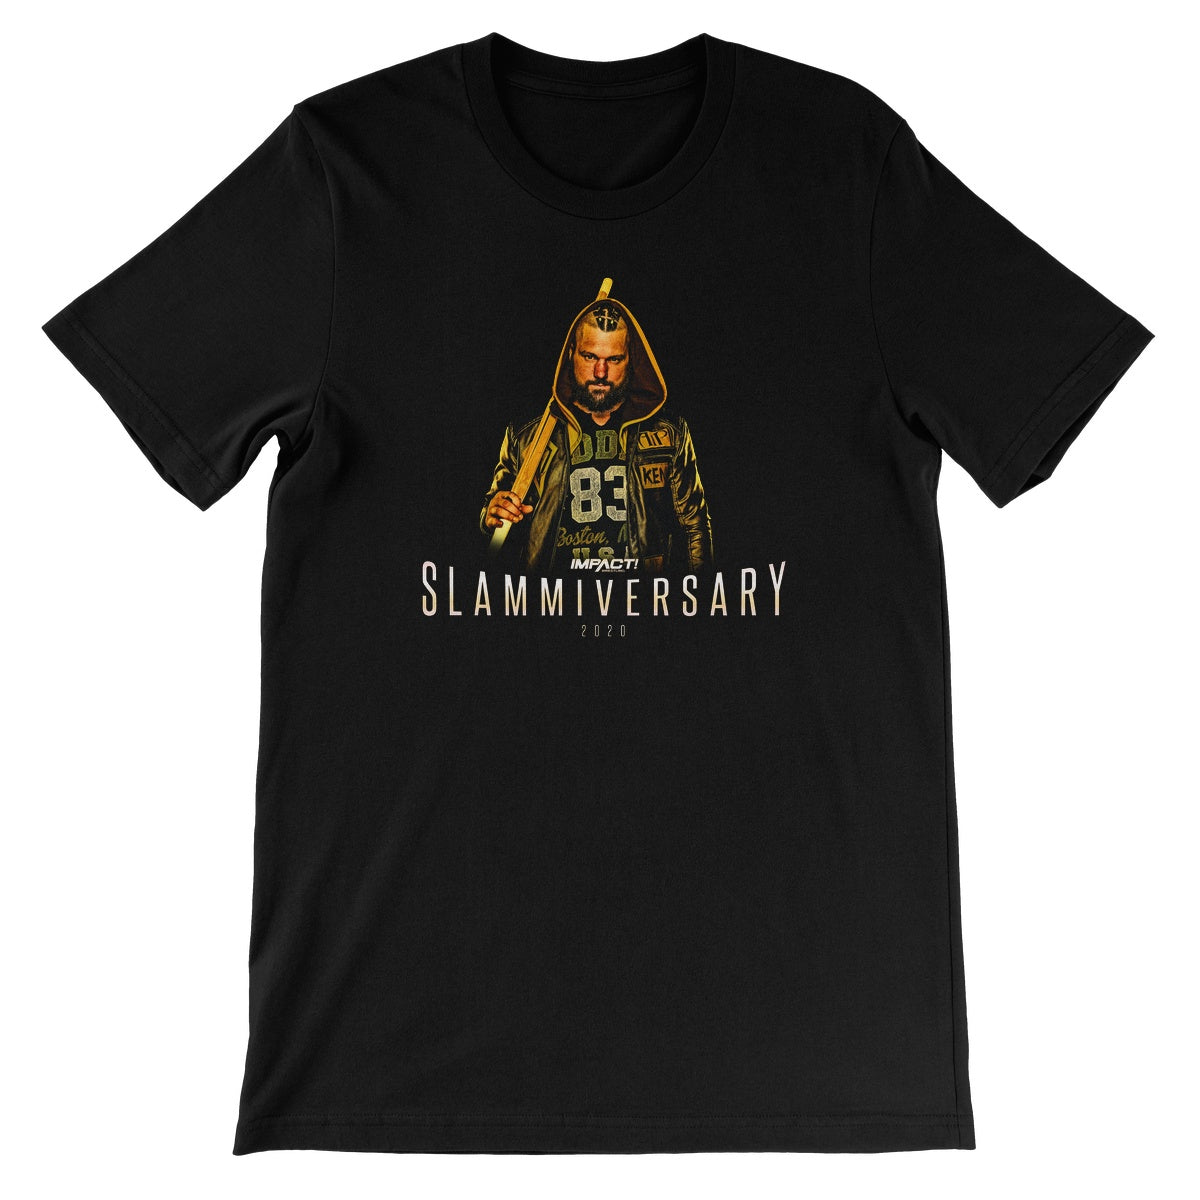 2020 Slammiversary Eddie Edwards Unisex Short Sleeve T-Shirt